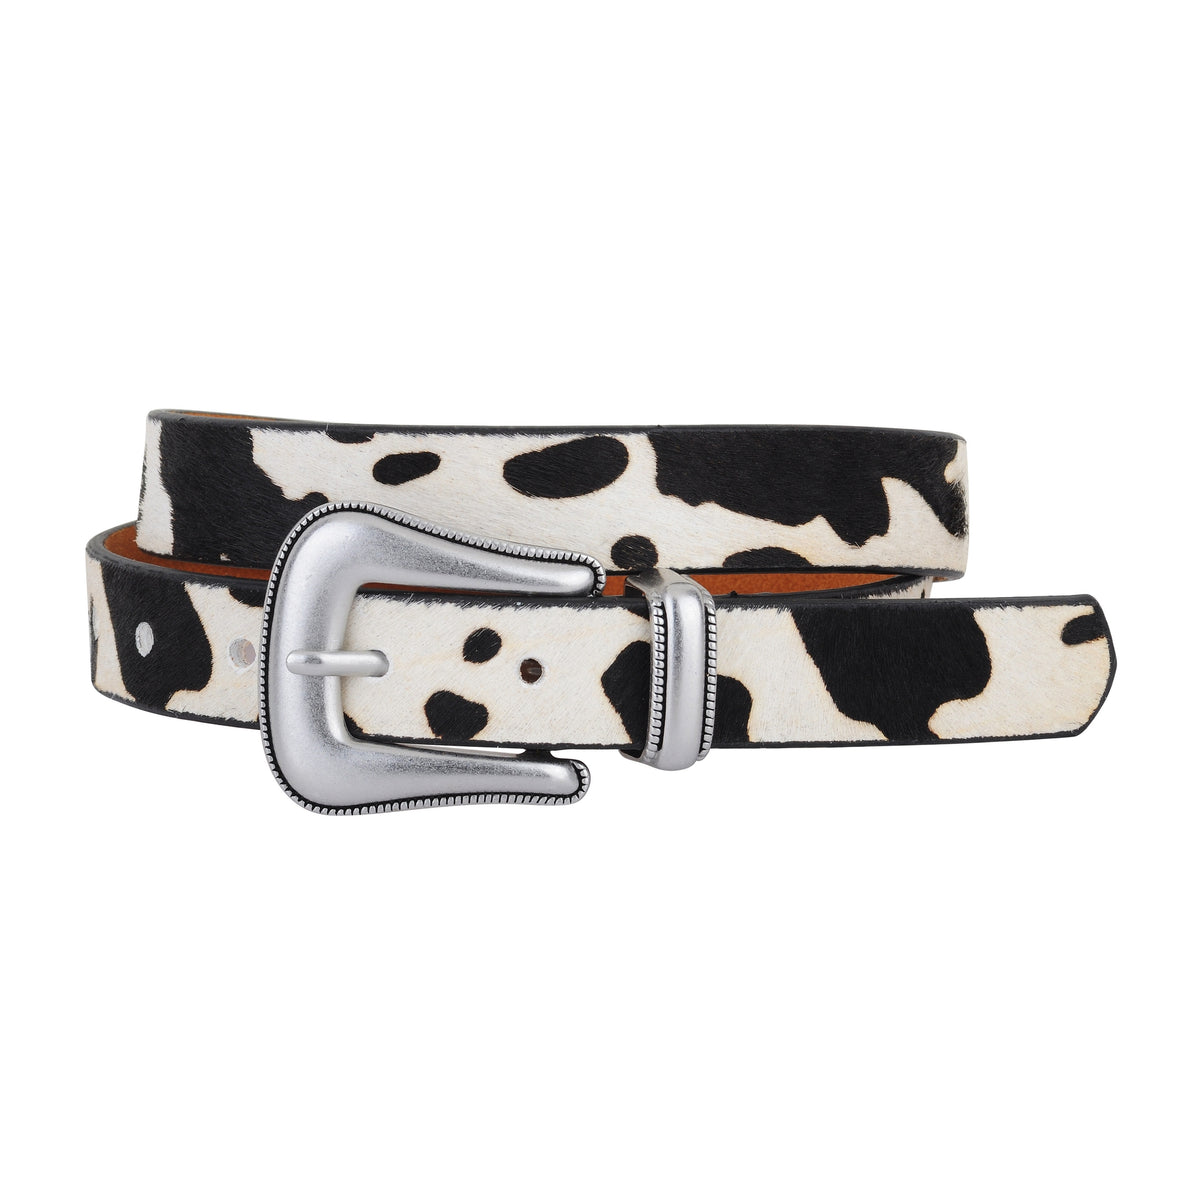 The Black Cow Print Belt – Punchy Vaquera